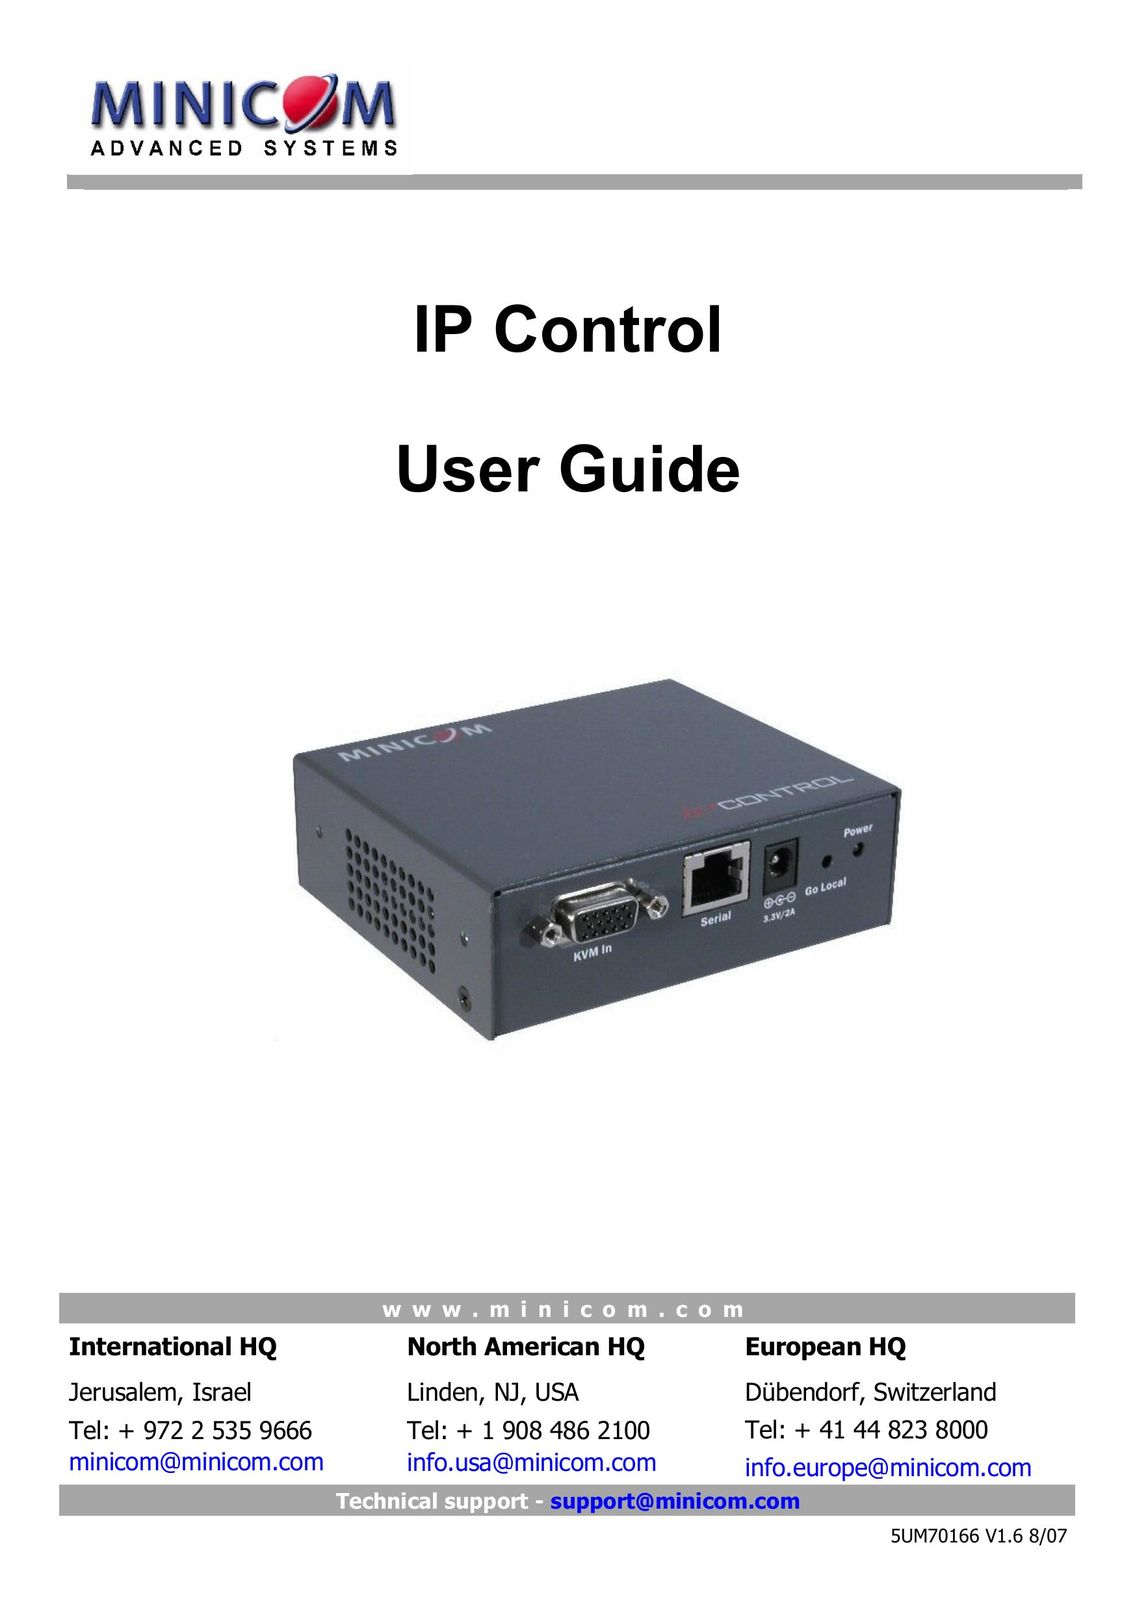 Minicom Advanced Systems IP Control Network Card User Manual